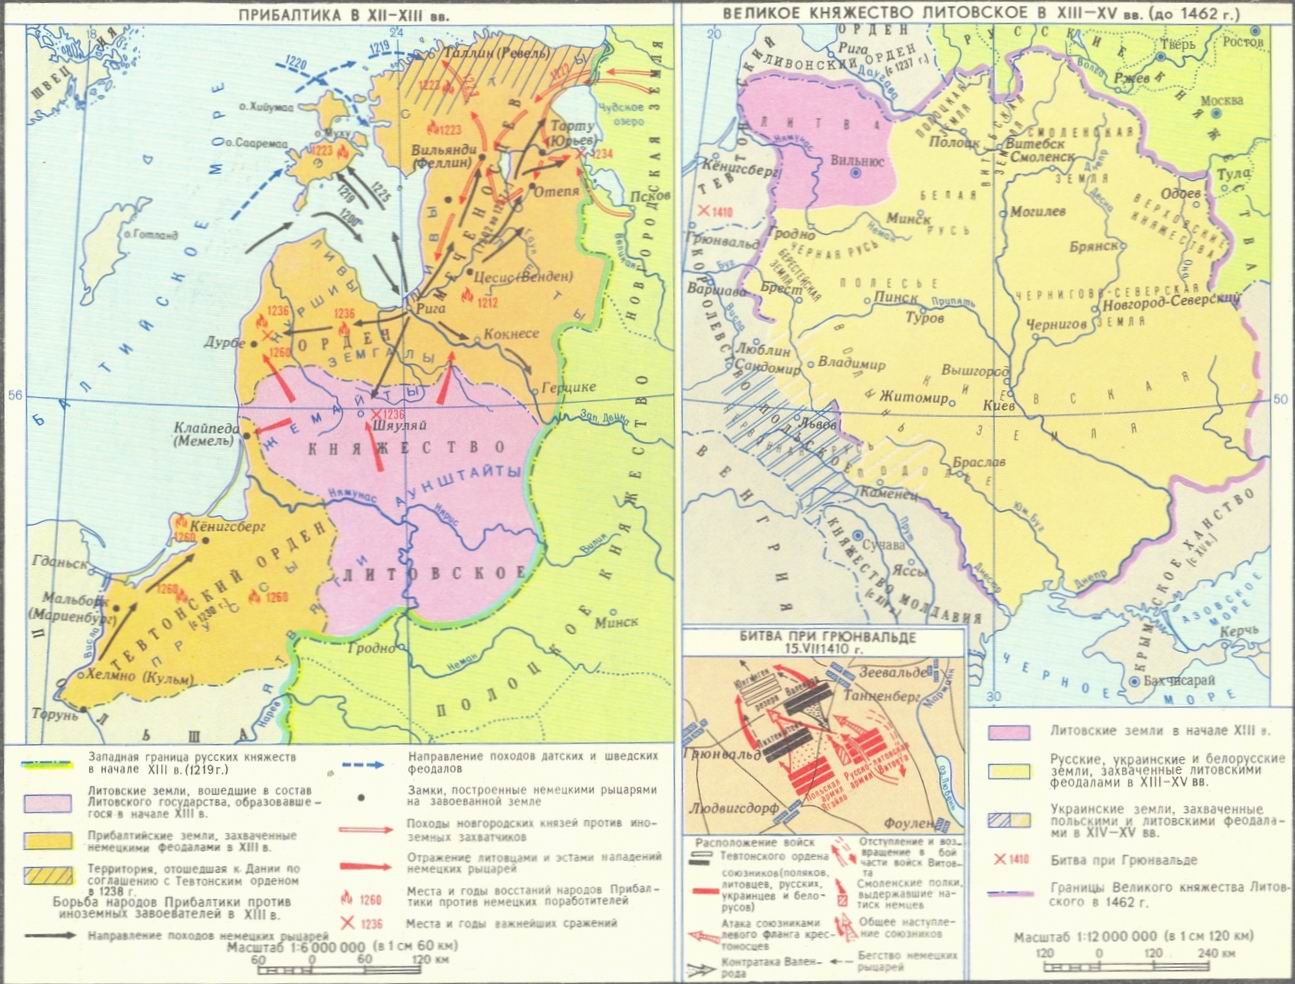 Ливонский орден 1236 год. Прибалтика в 13 веке карта. Карта Прибалтики 12-13 век. Прибалтика 13 век. Прибалтика в 13 веке.